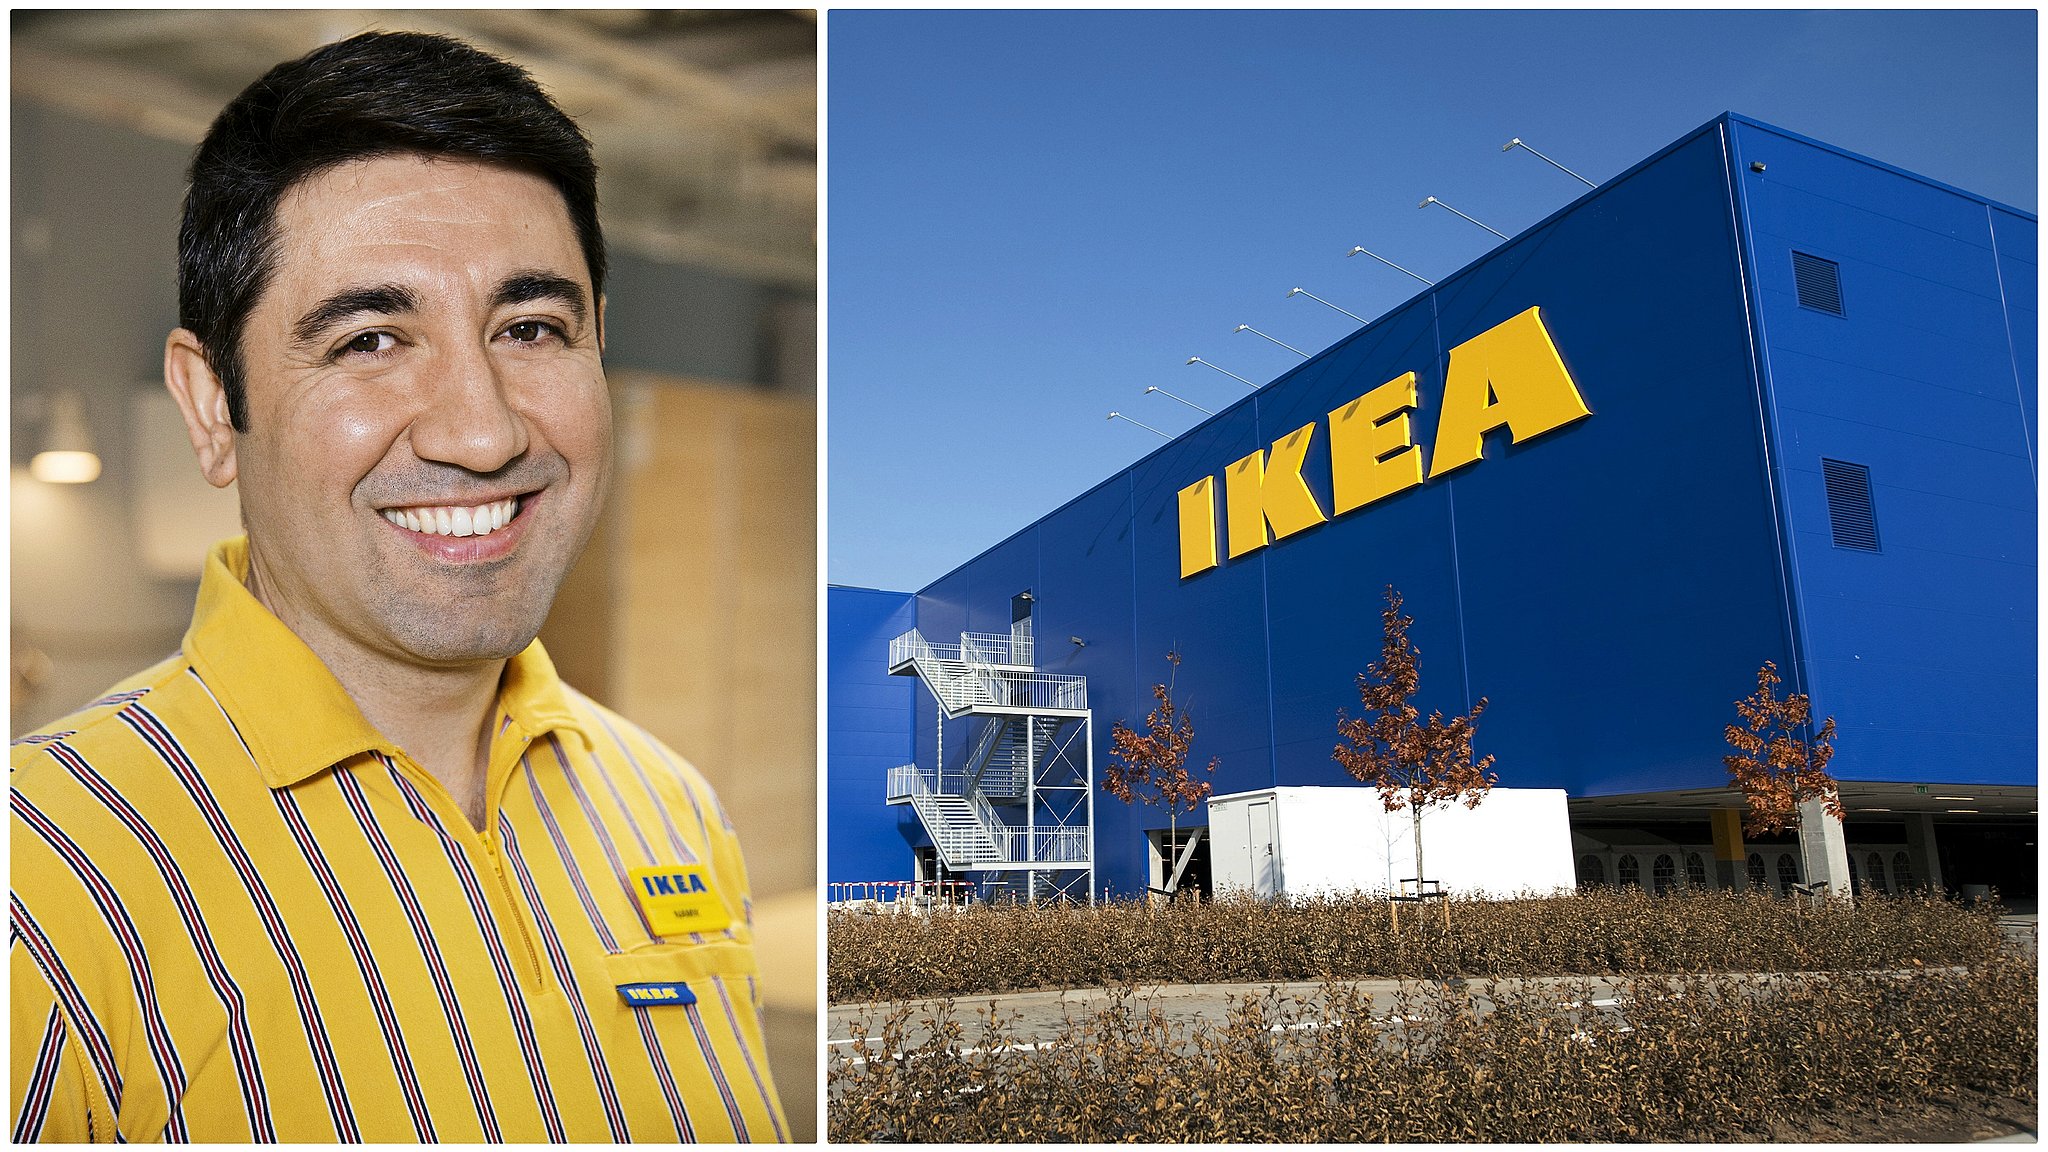 Ikea-ansatte får fyldt på | TV2 Fyn